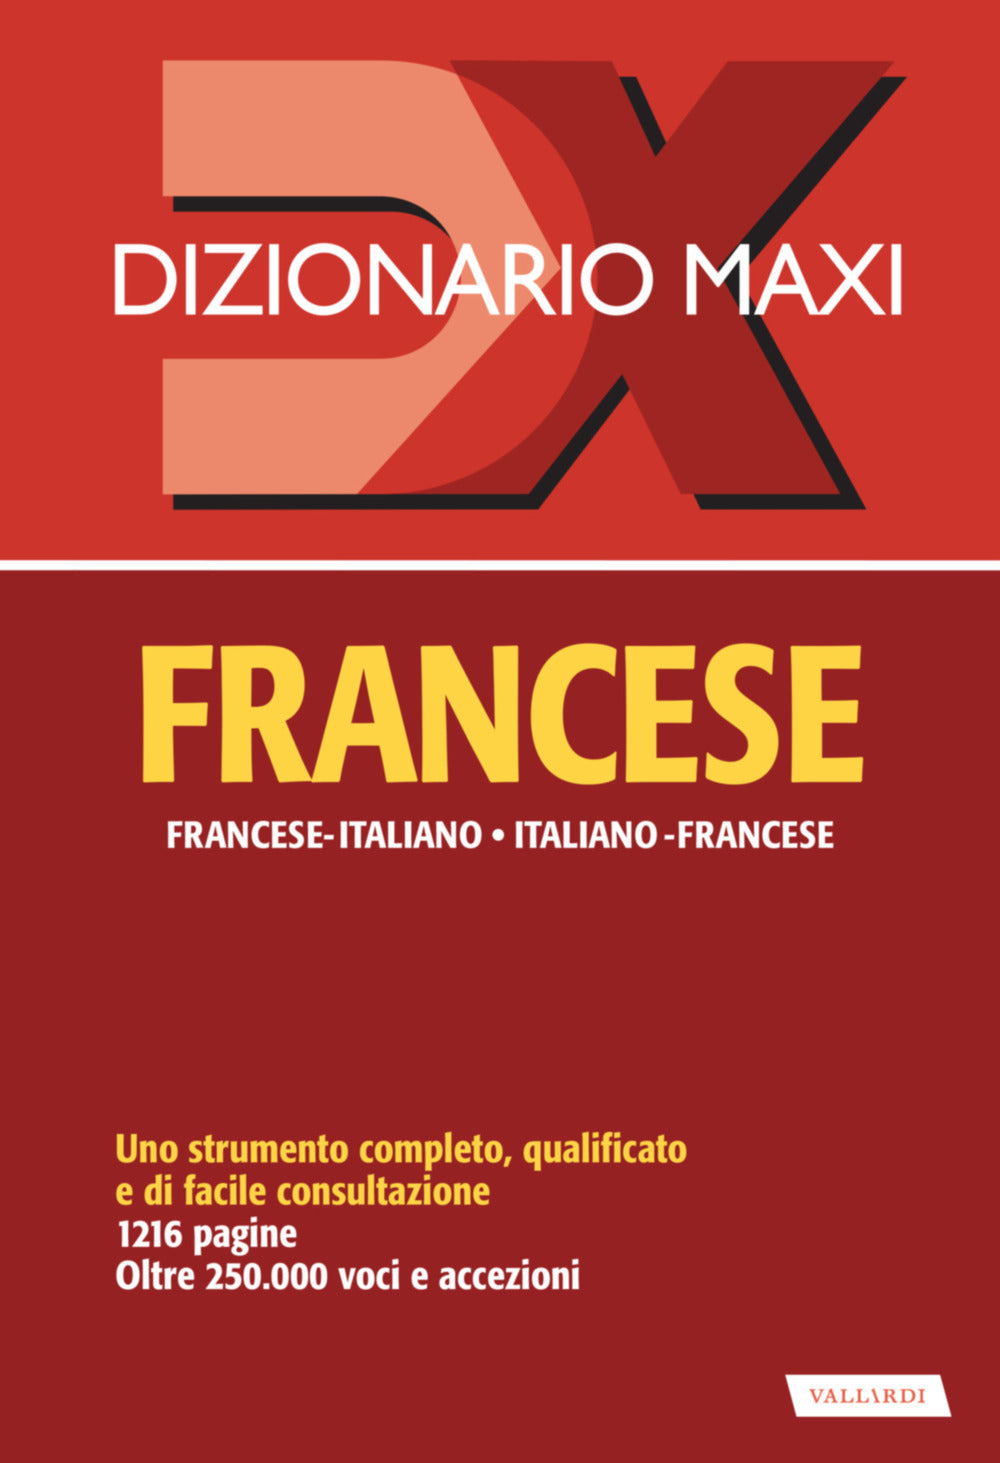 Dizionario maxi. Francese. Francese-italiano, italiano-francese.